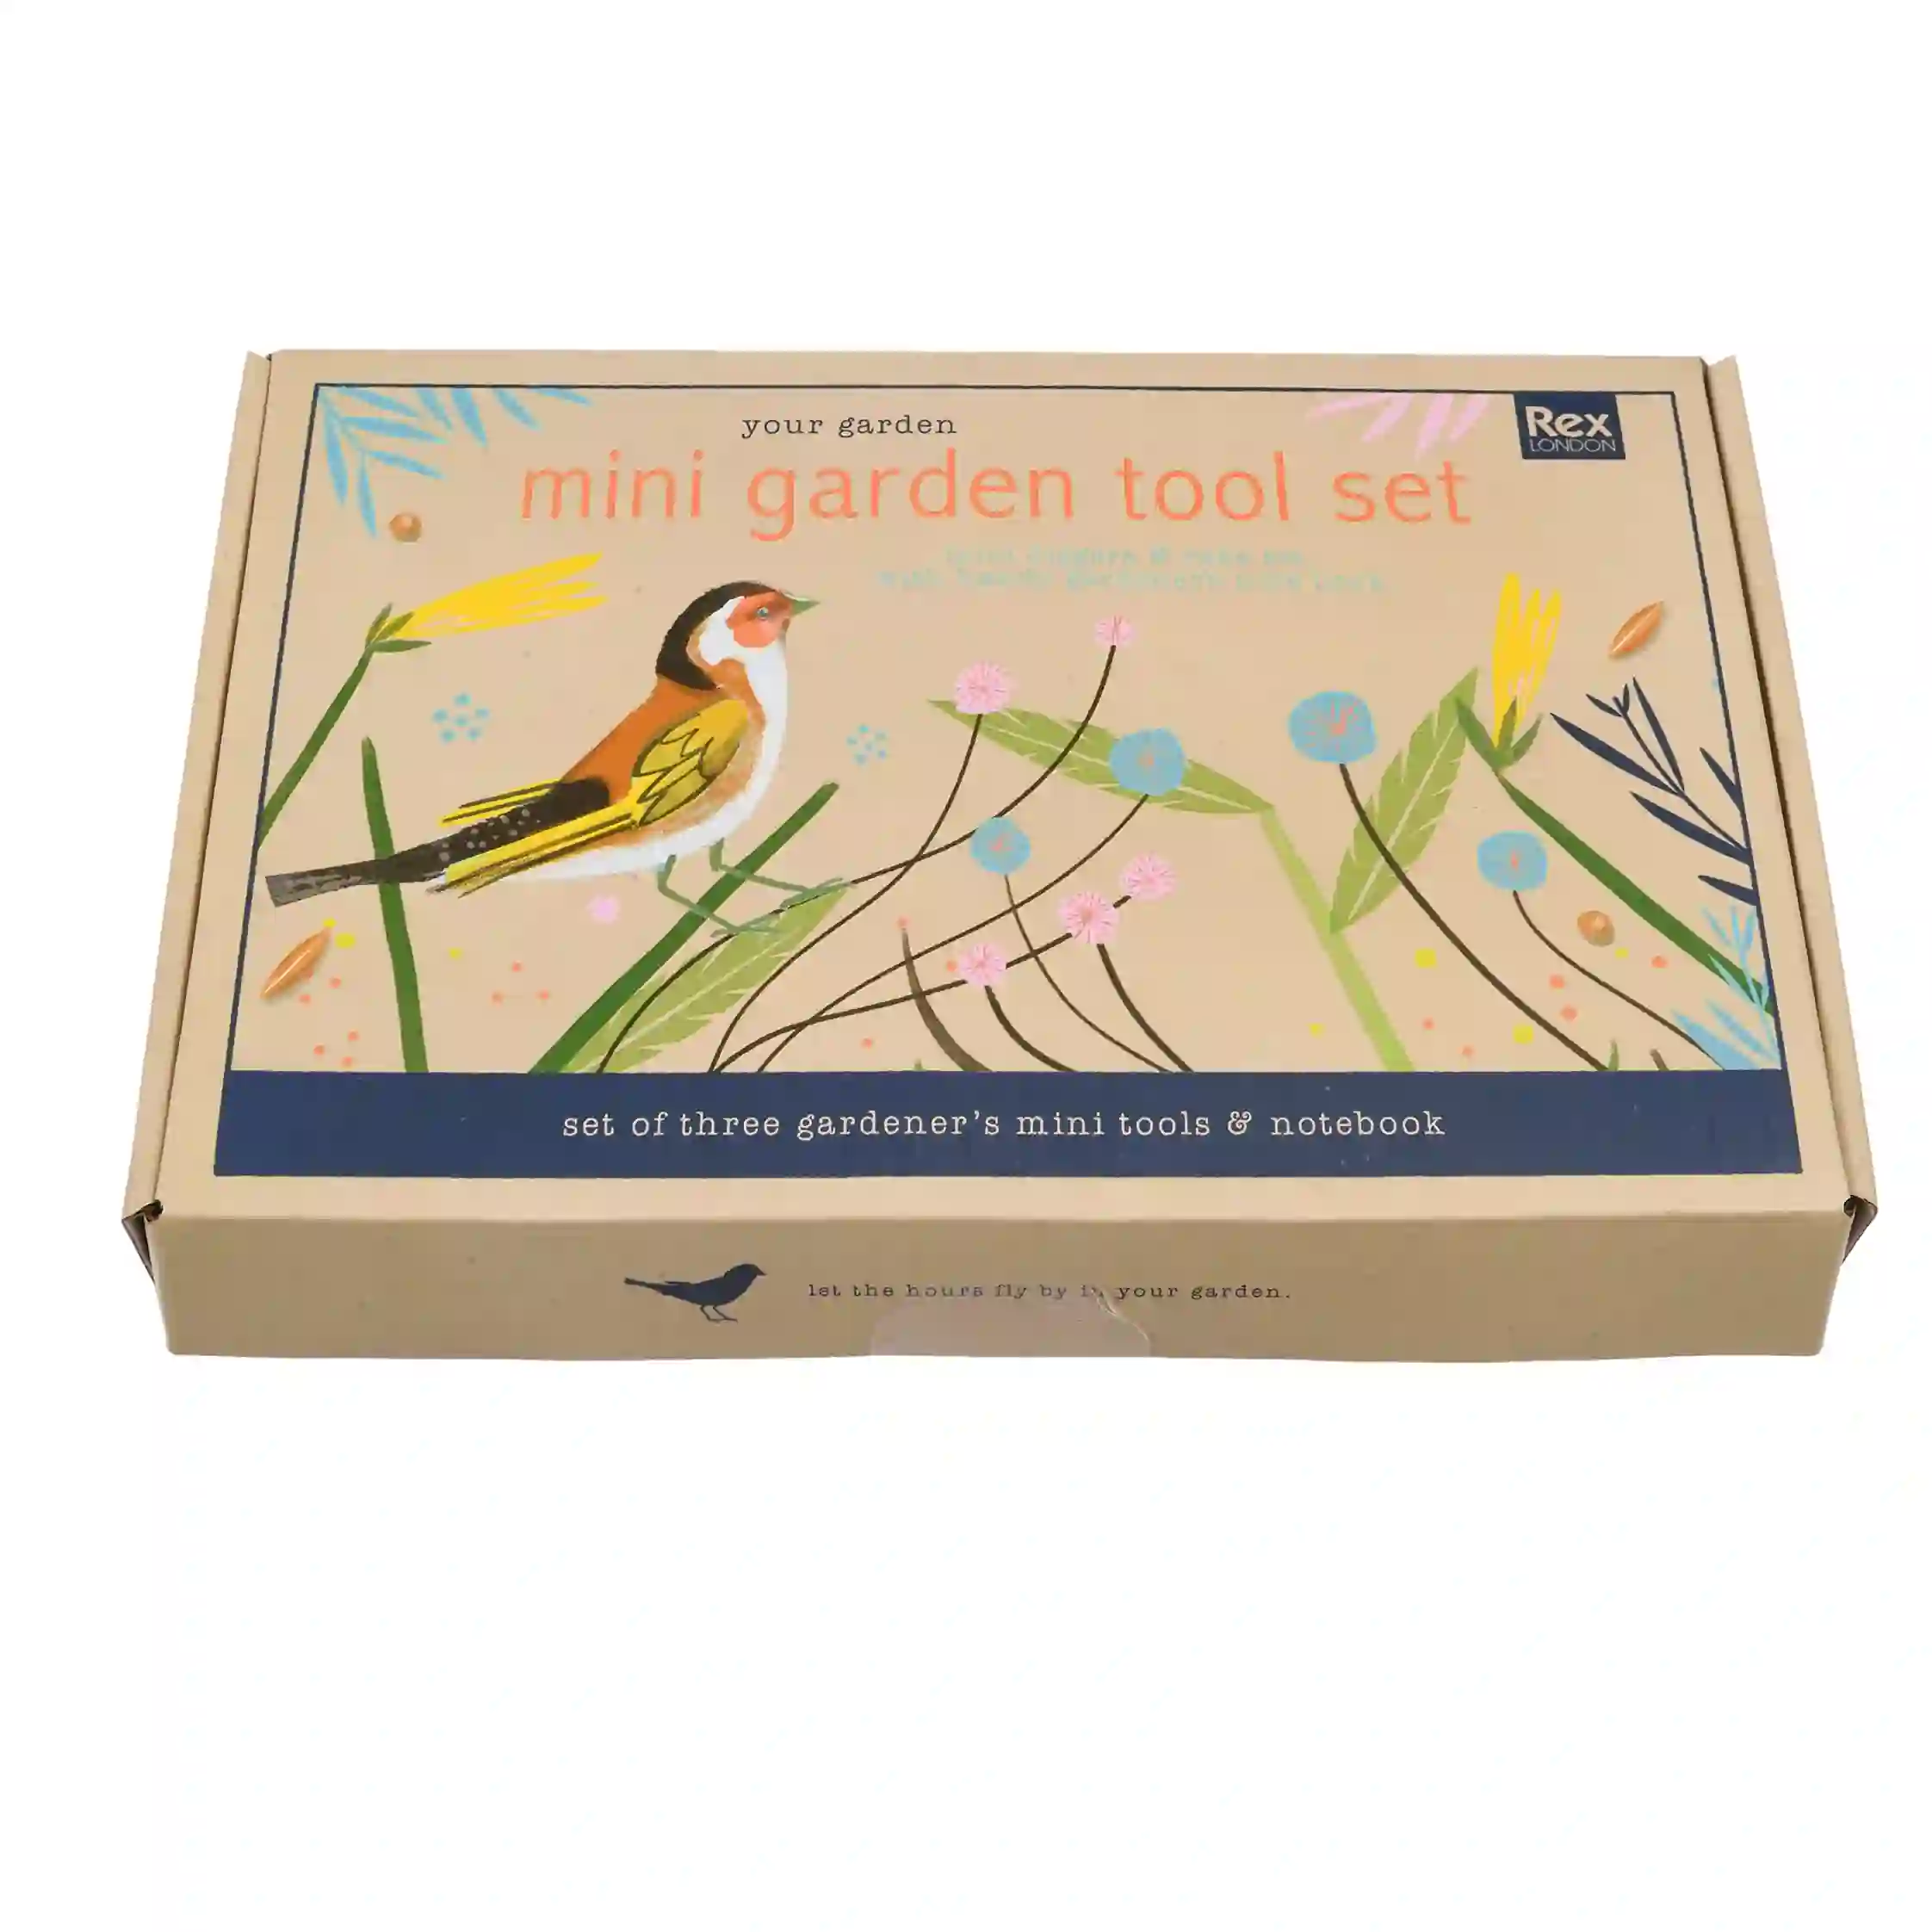 mini gardening tool set - your garden